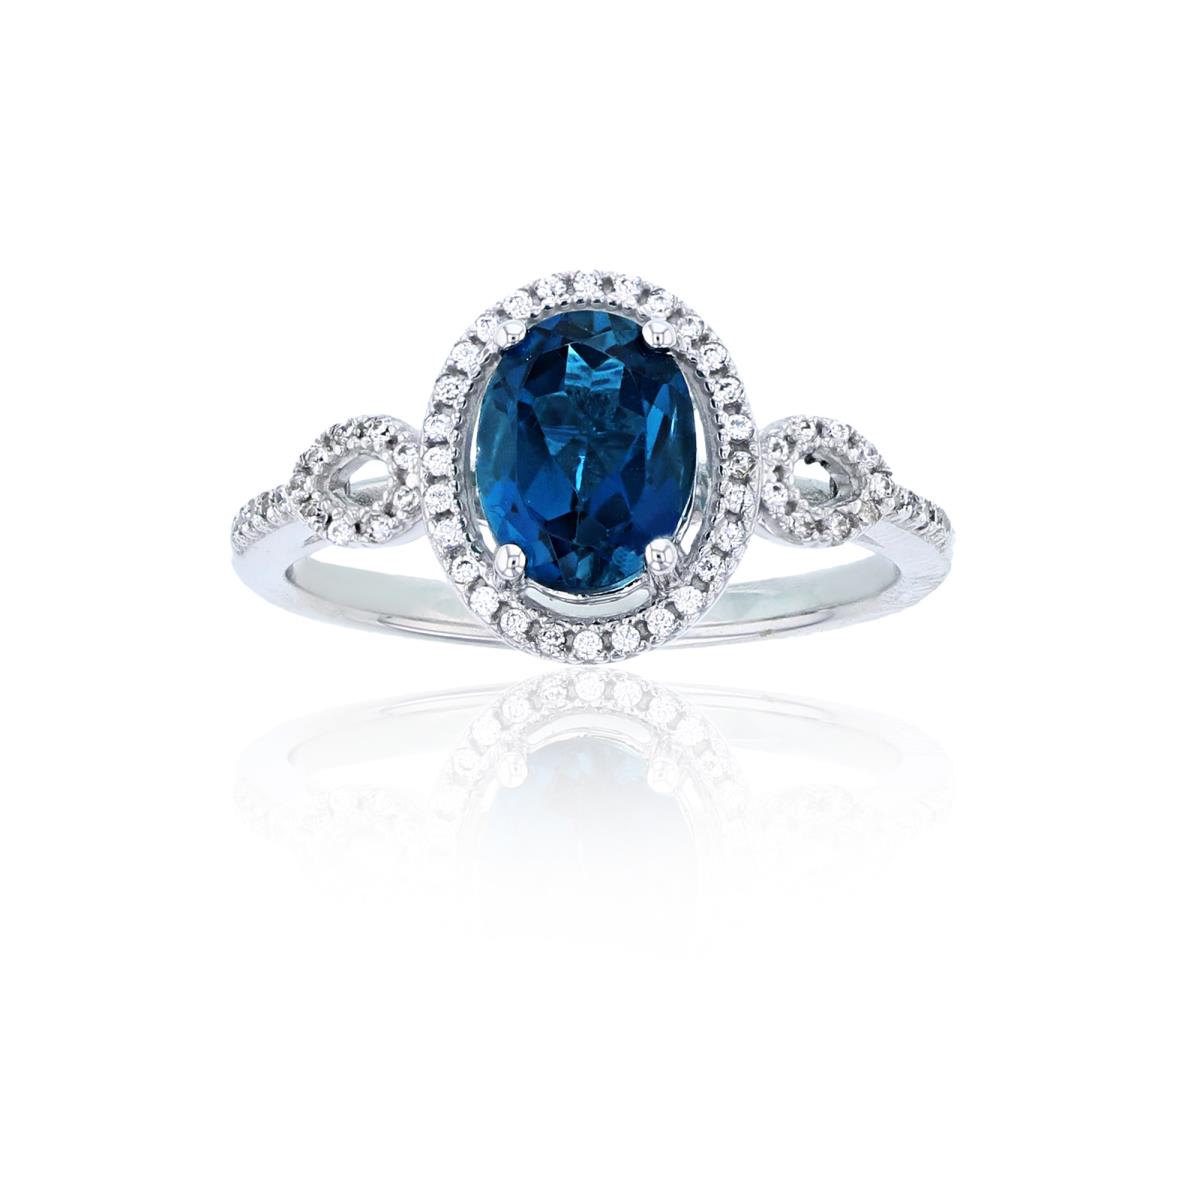 14K White Gold 0.174cttw Rnd Diamonds & 8x6mm Ov London Blue Topaz Halo Ring